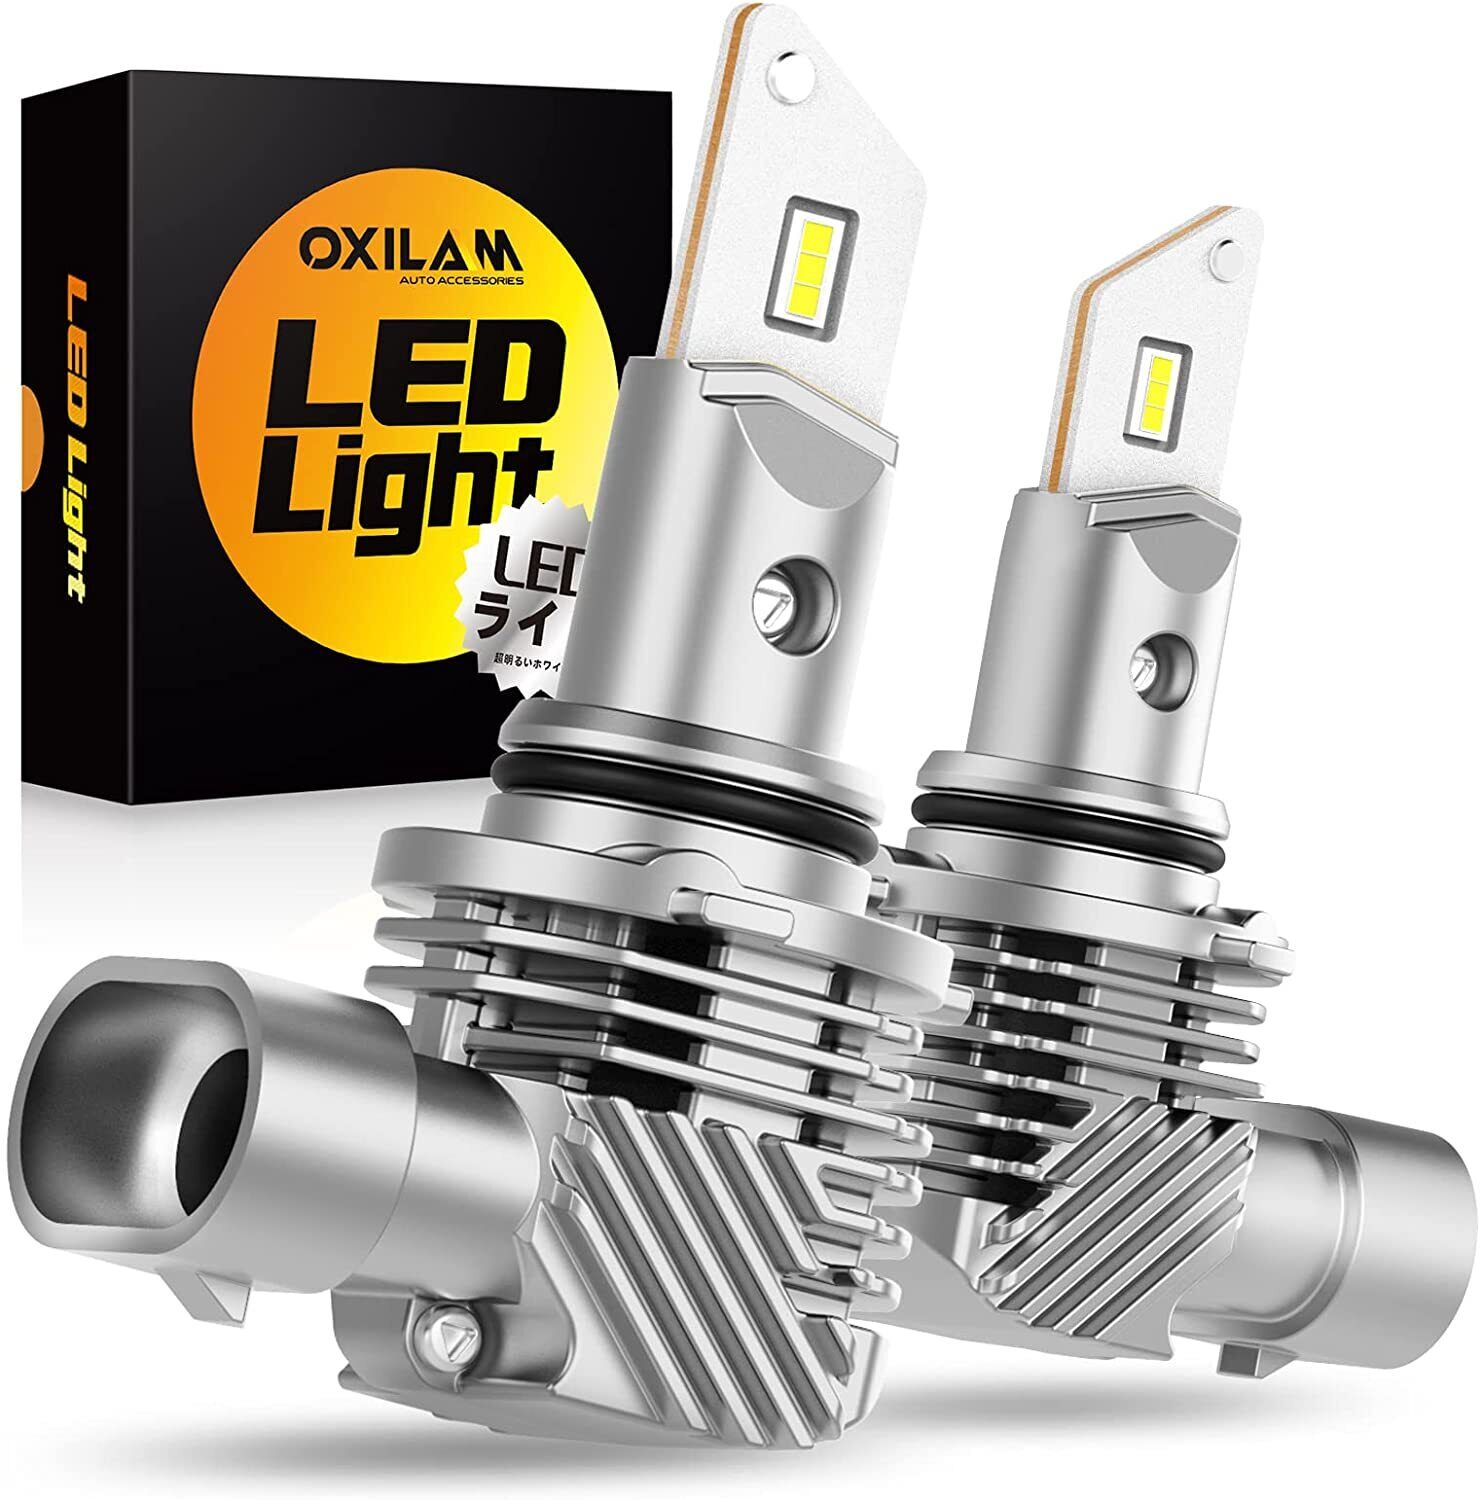 2x OXILAM 9005 LED Headlight Kit Bulbs Conversion High Beam White Super Bright